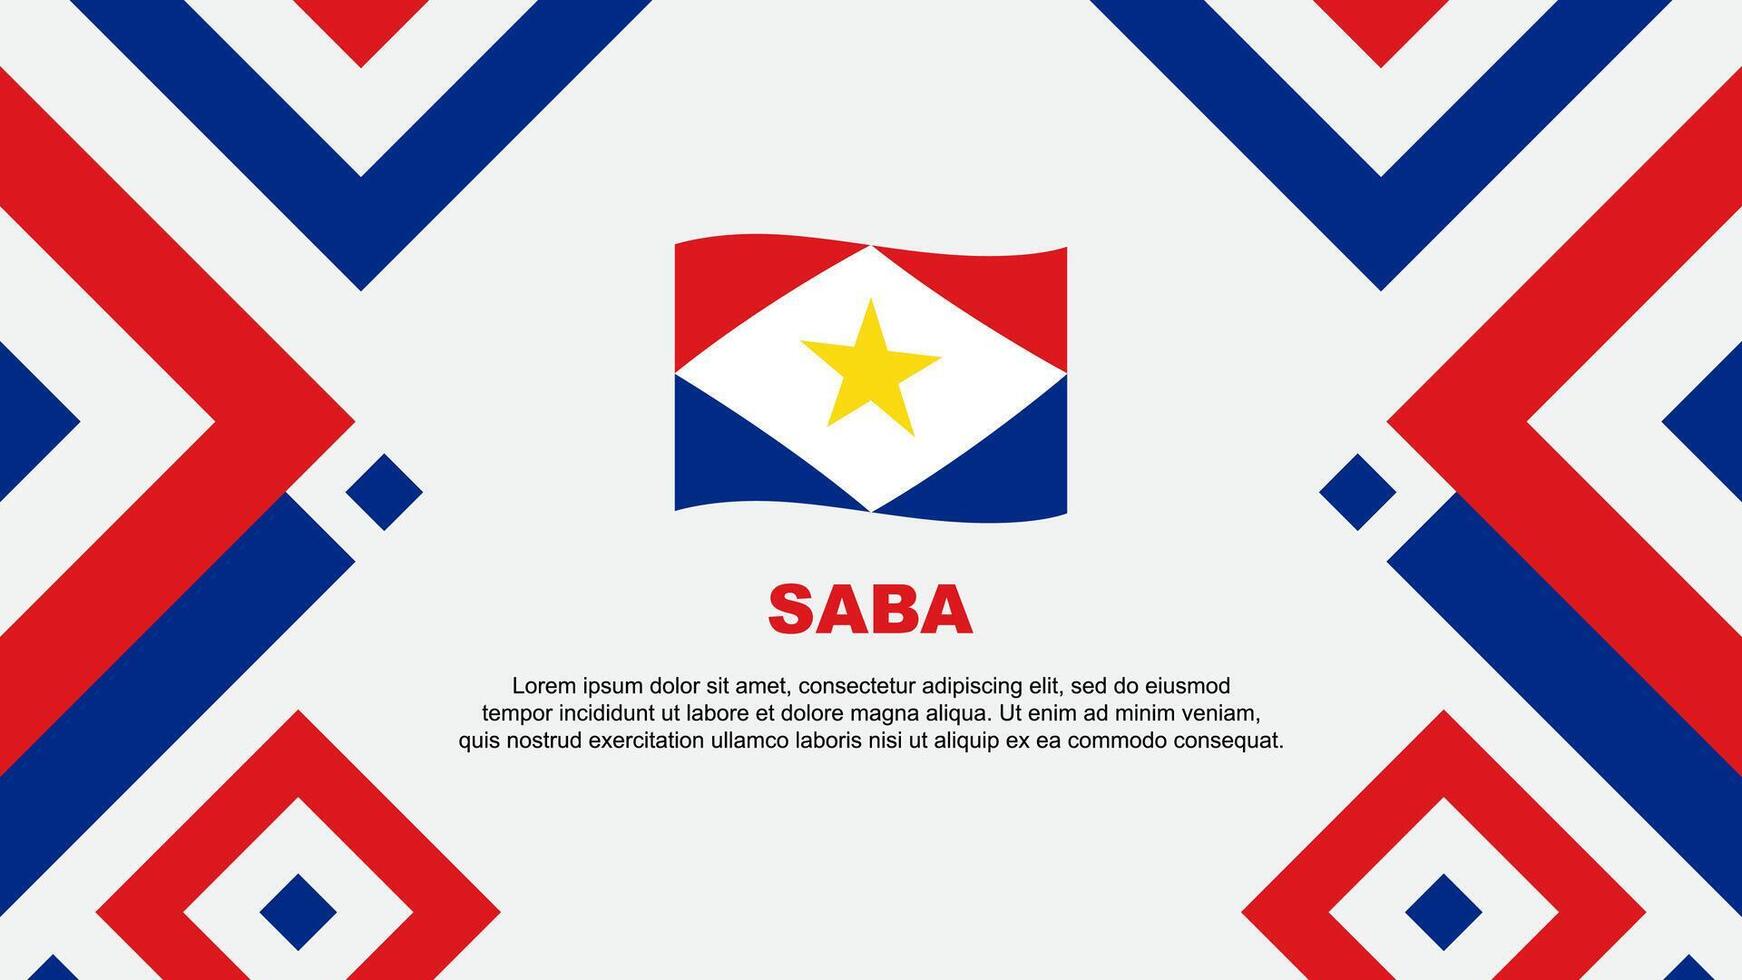 Saba Flag Abstract Background Design Template. Saba Independence Day Banner Wallpaper Vector Illustration. Saba Template